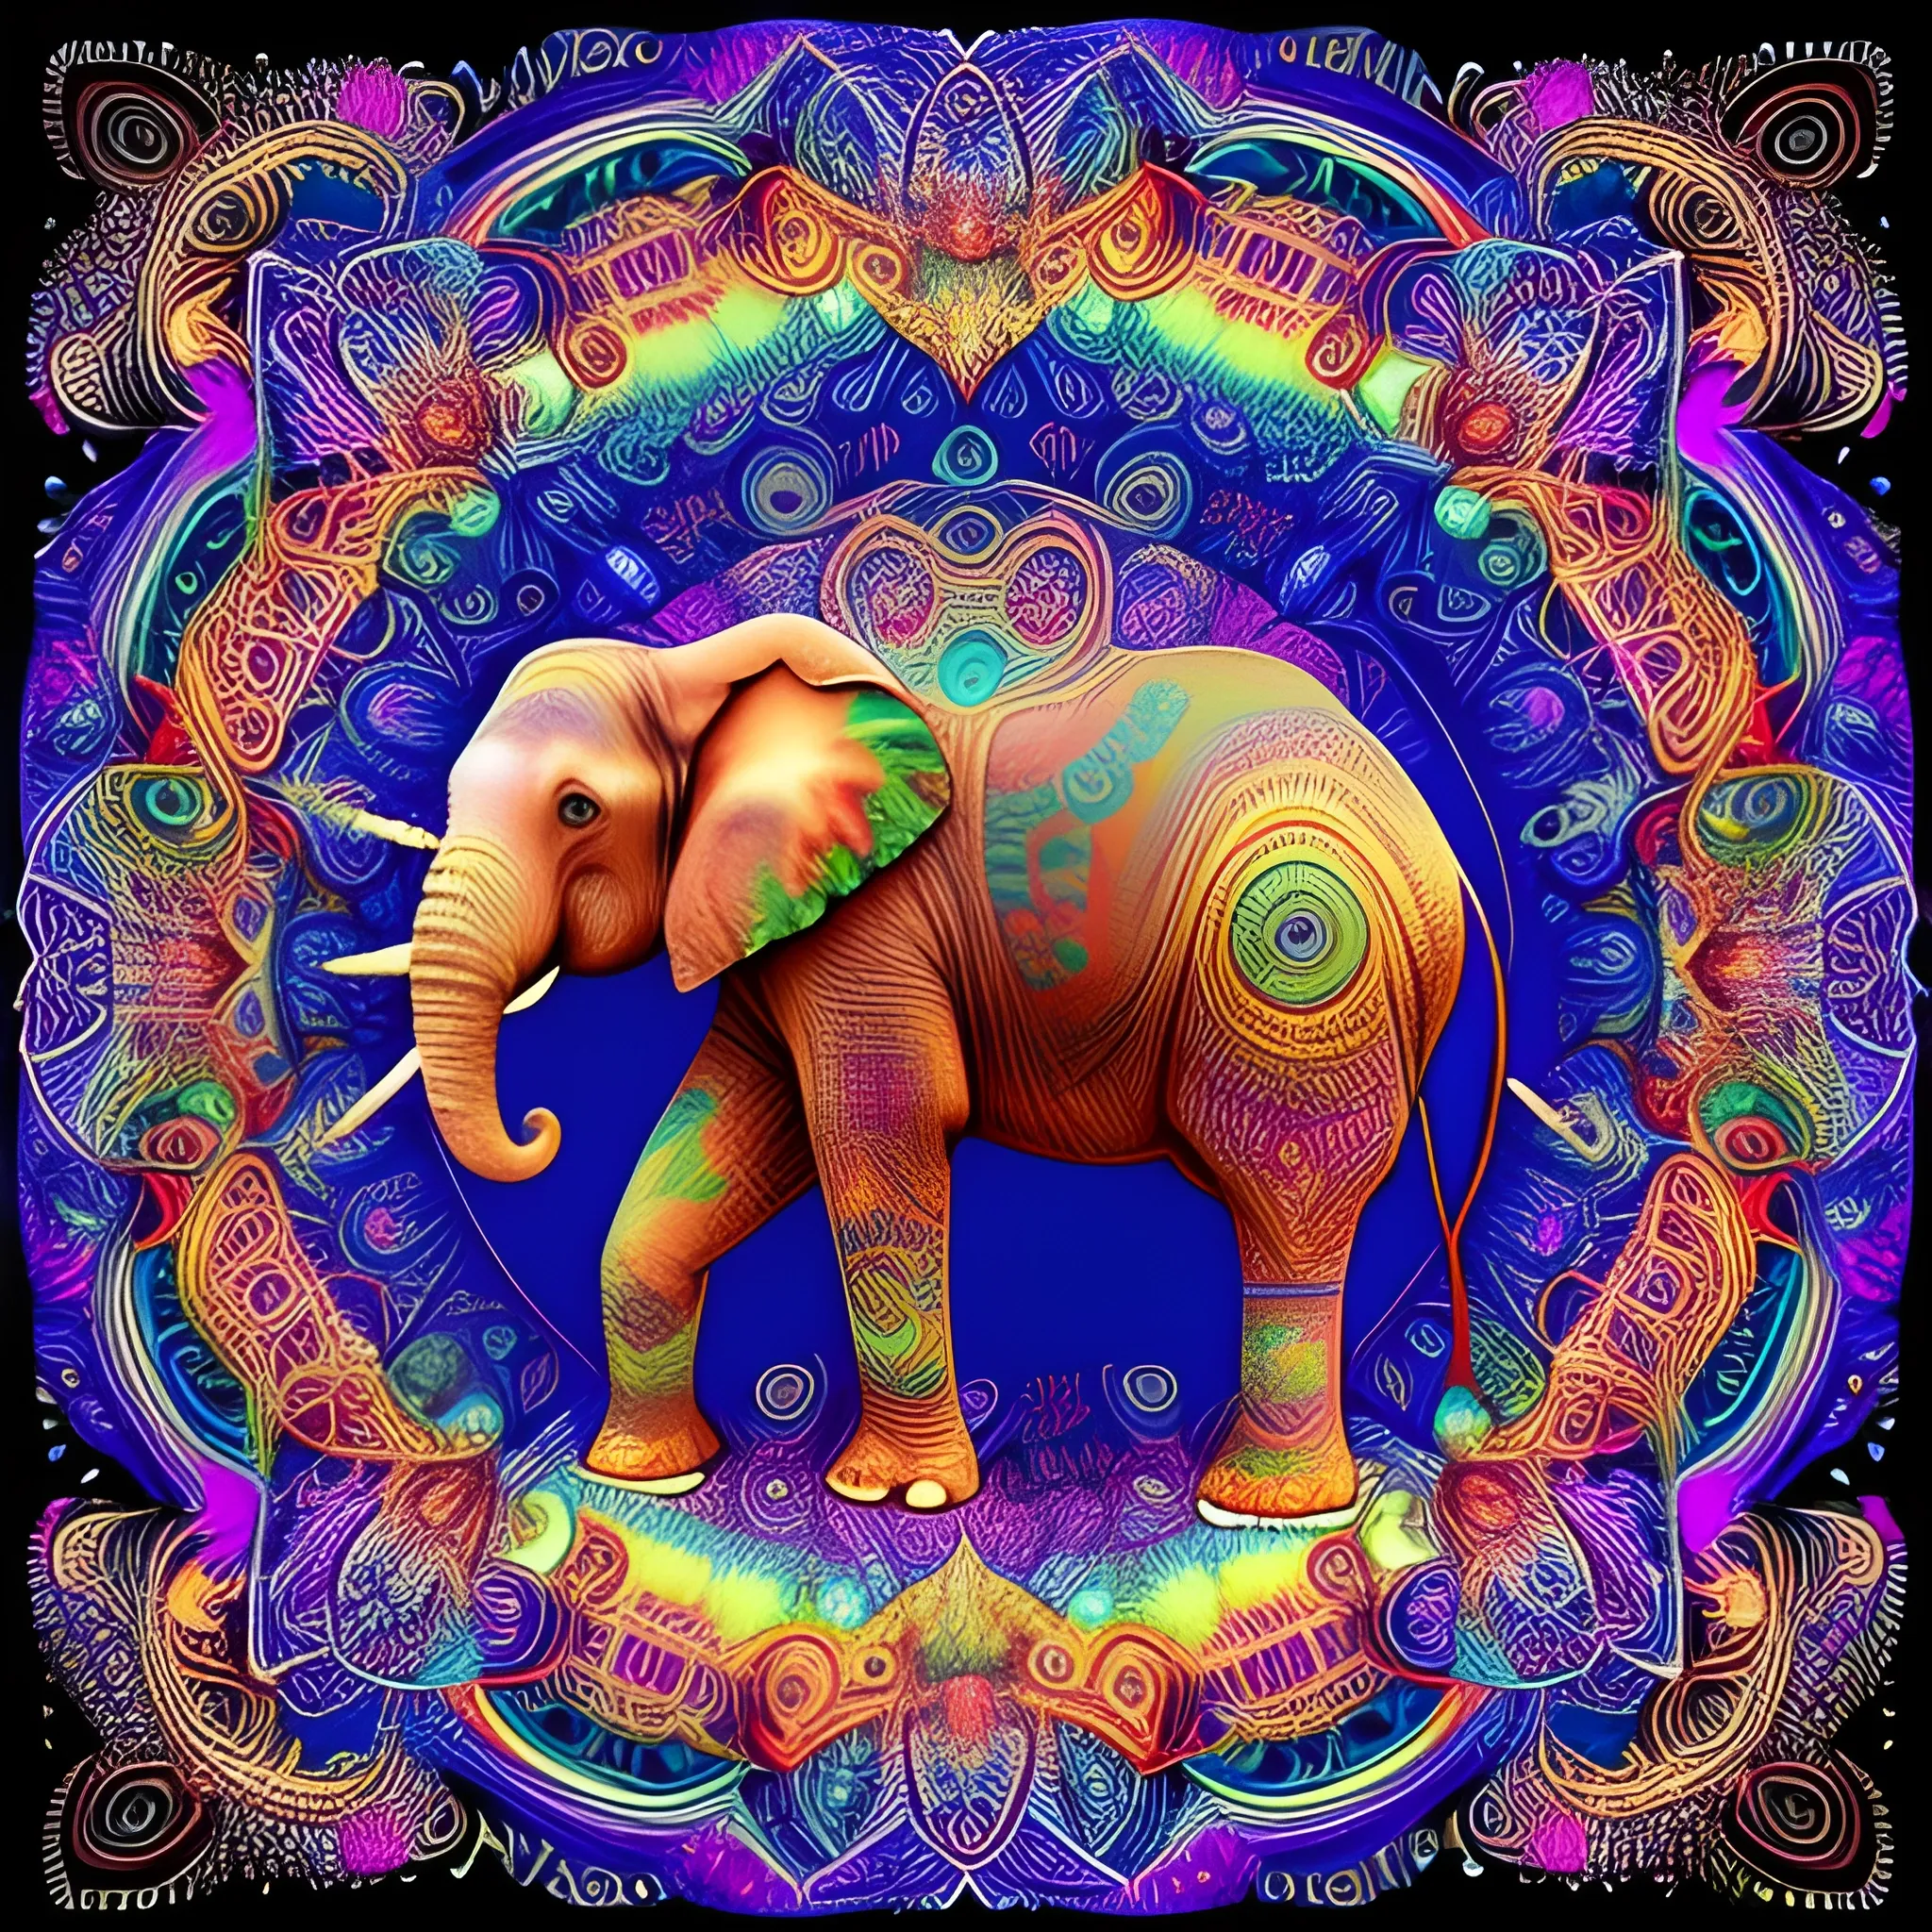 trippy elephant backgrounds